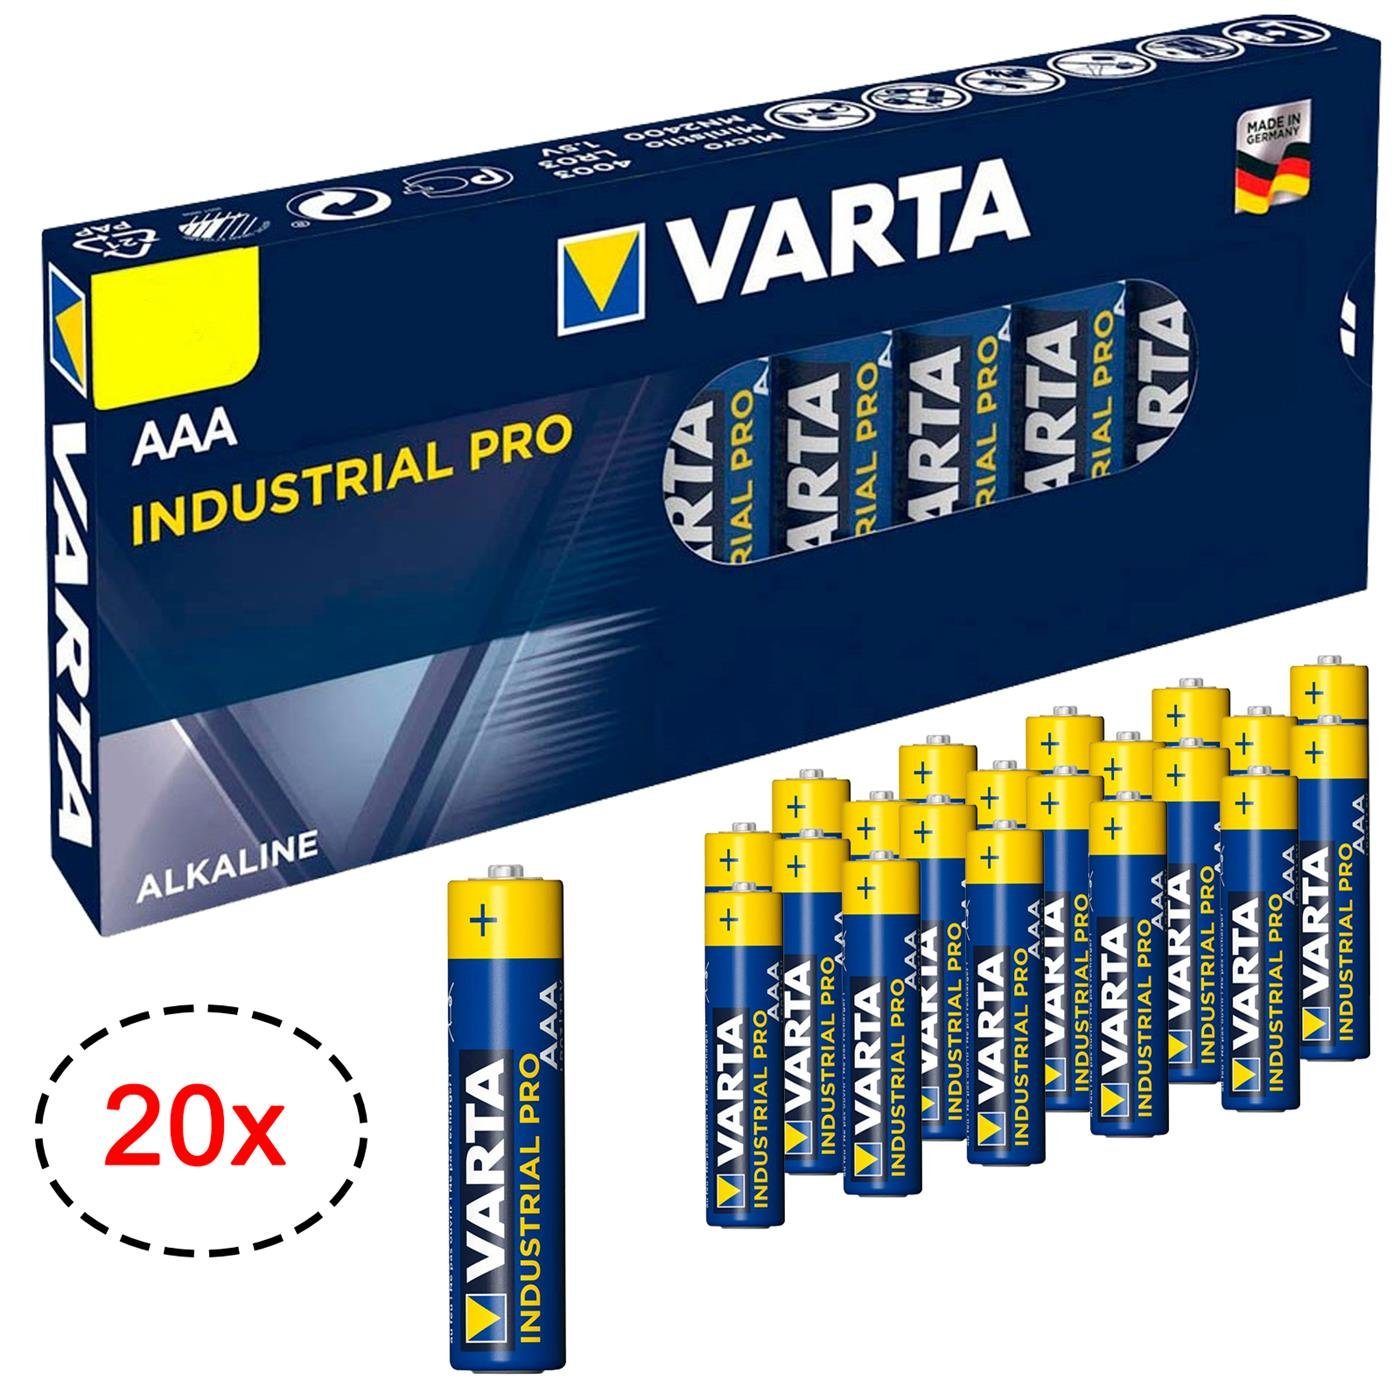 VARTA 20er Pack AAA Industrial Alkaline Micro Batterie, (1,5 V, 20 St), Made in Germany Batterien 1,5V für Taschenlampe Spielzeug Wand Uhr